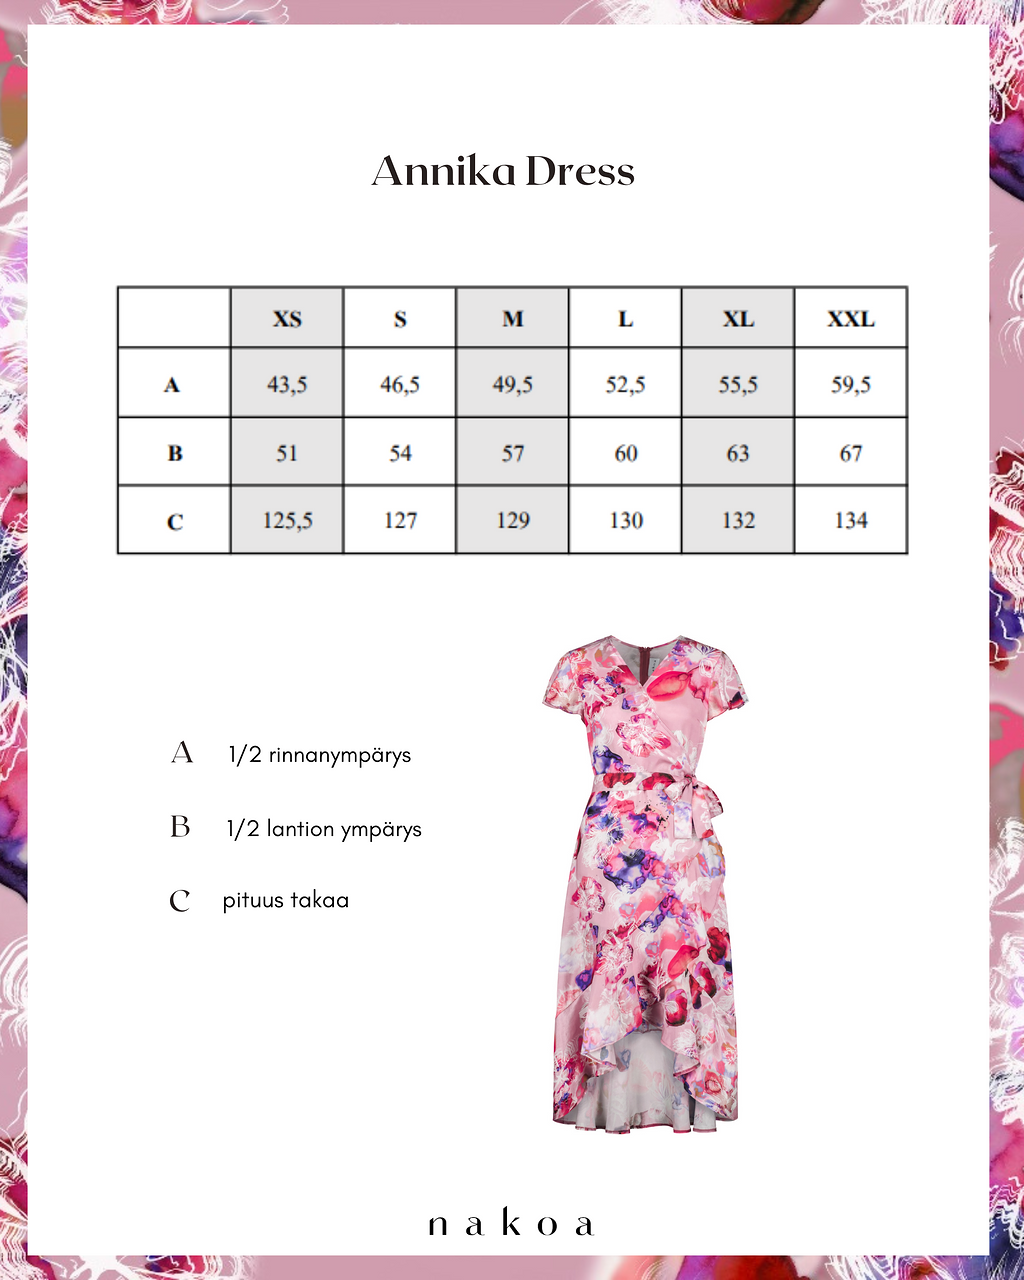 Annika Dress, Coral Reef